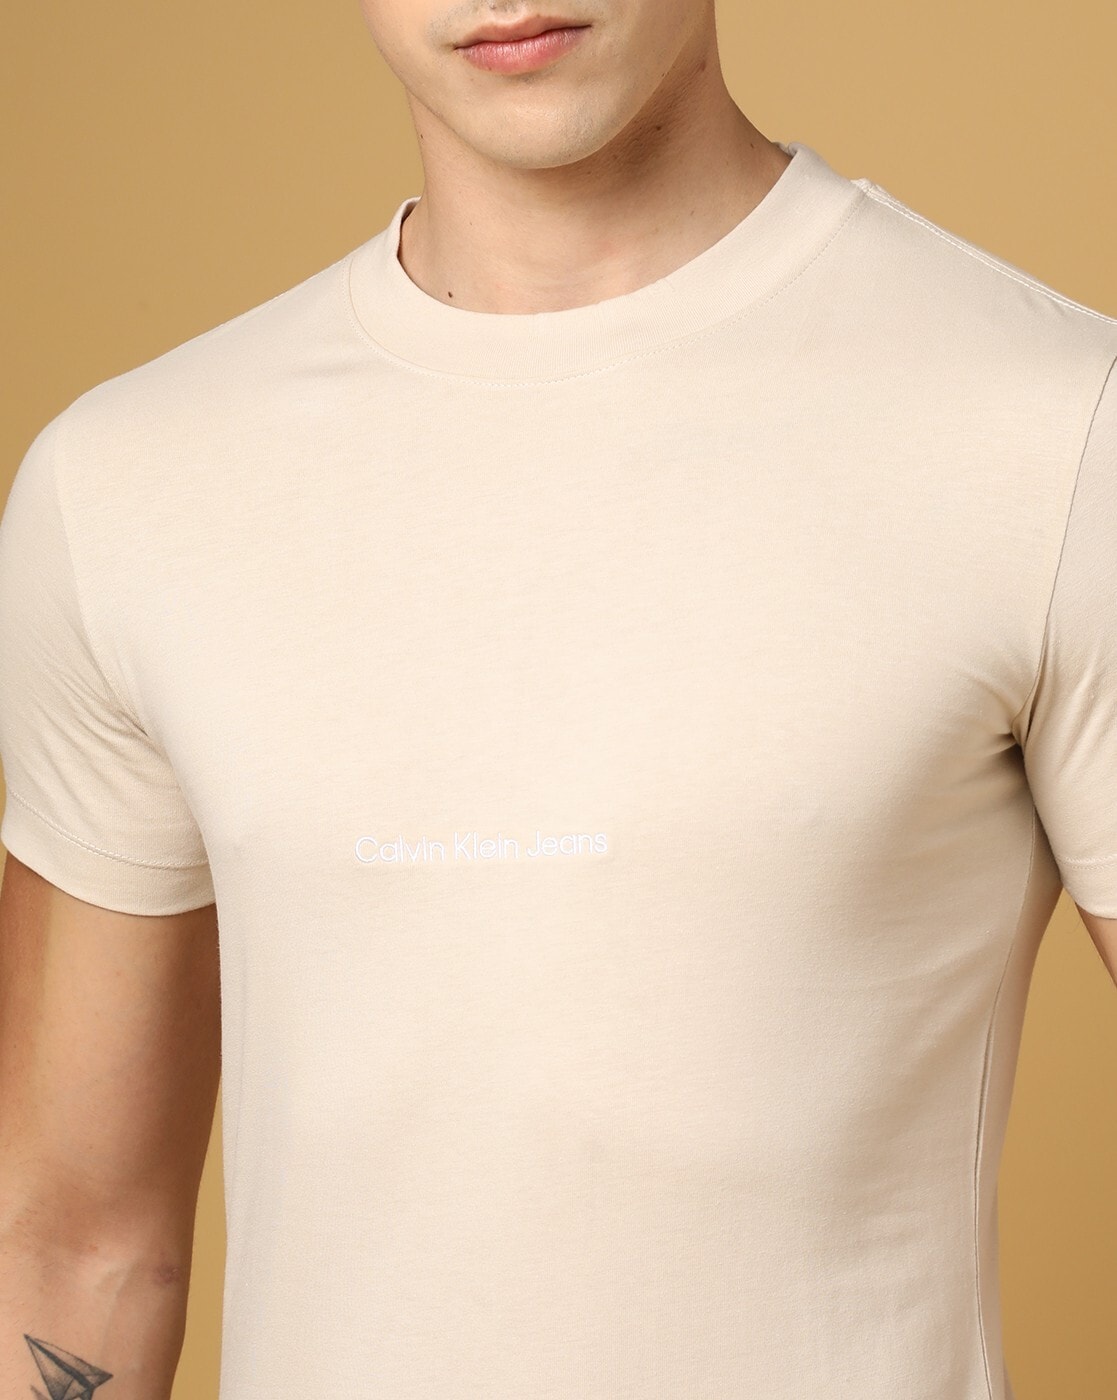 for Buy Klein by Calvin Beige Jeans Online Men Tshirts